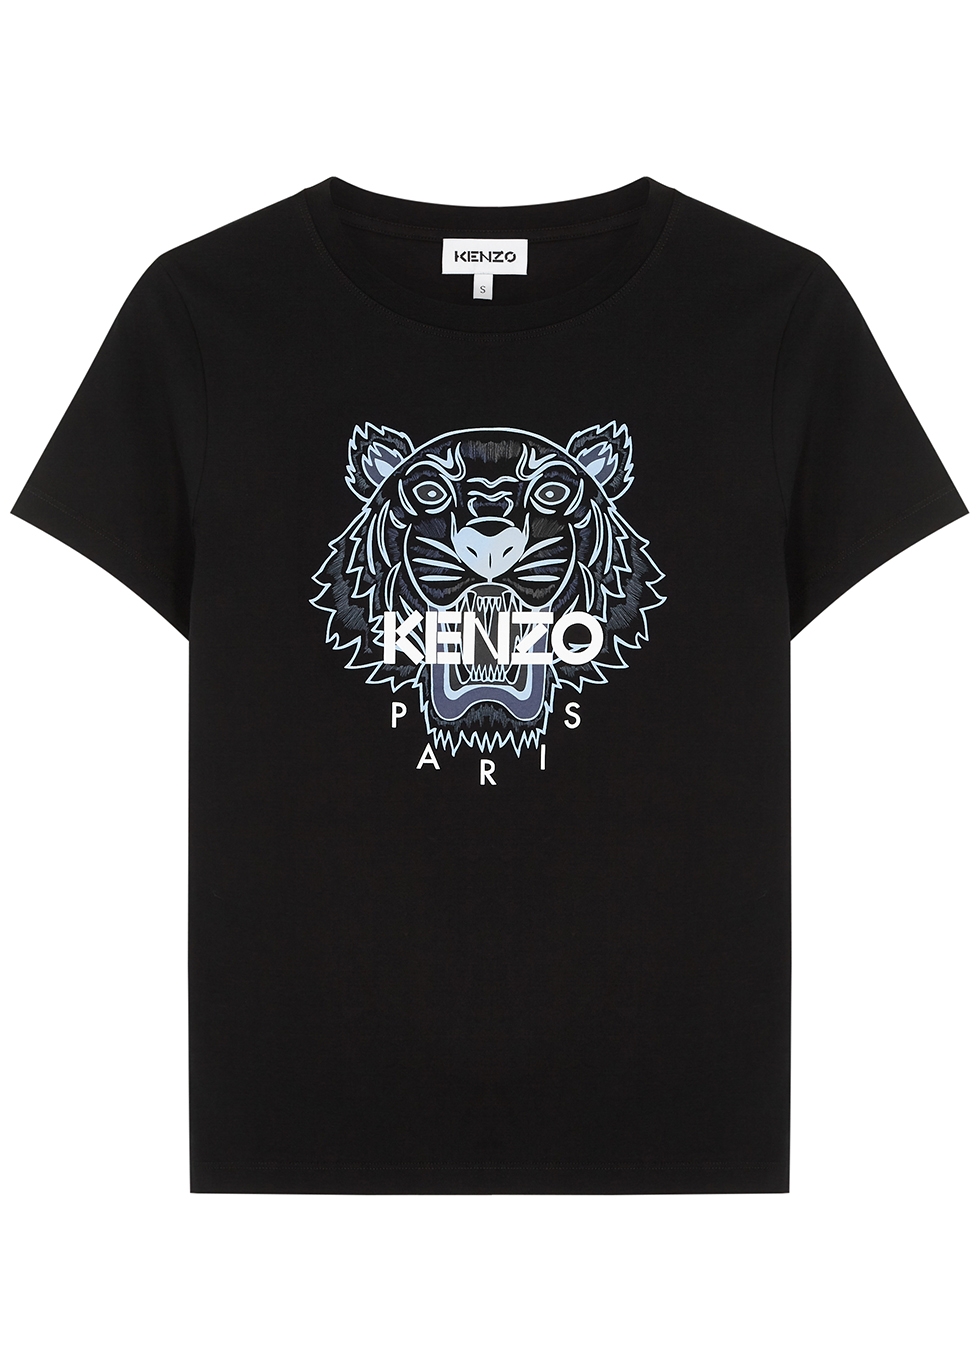 buy kenzo t shirt